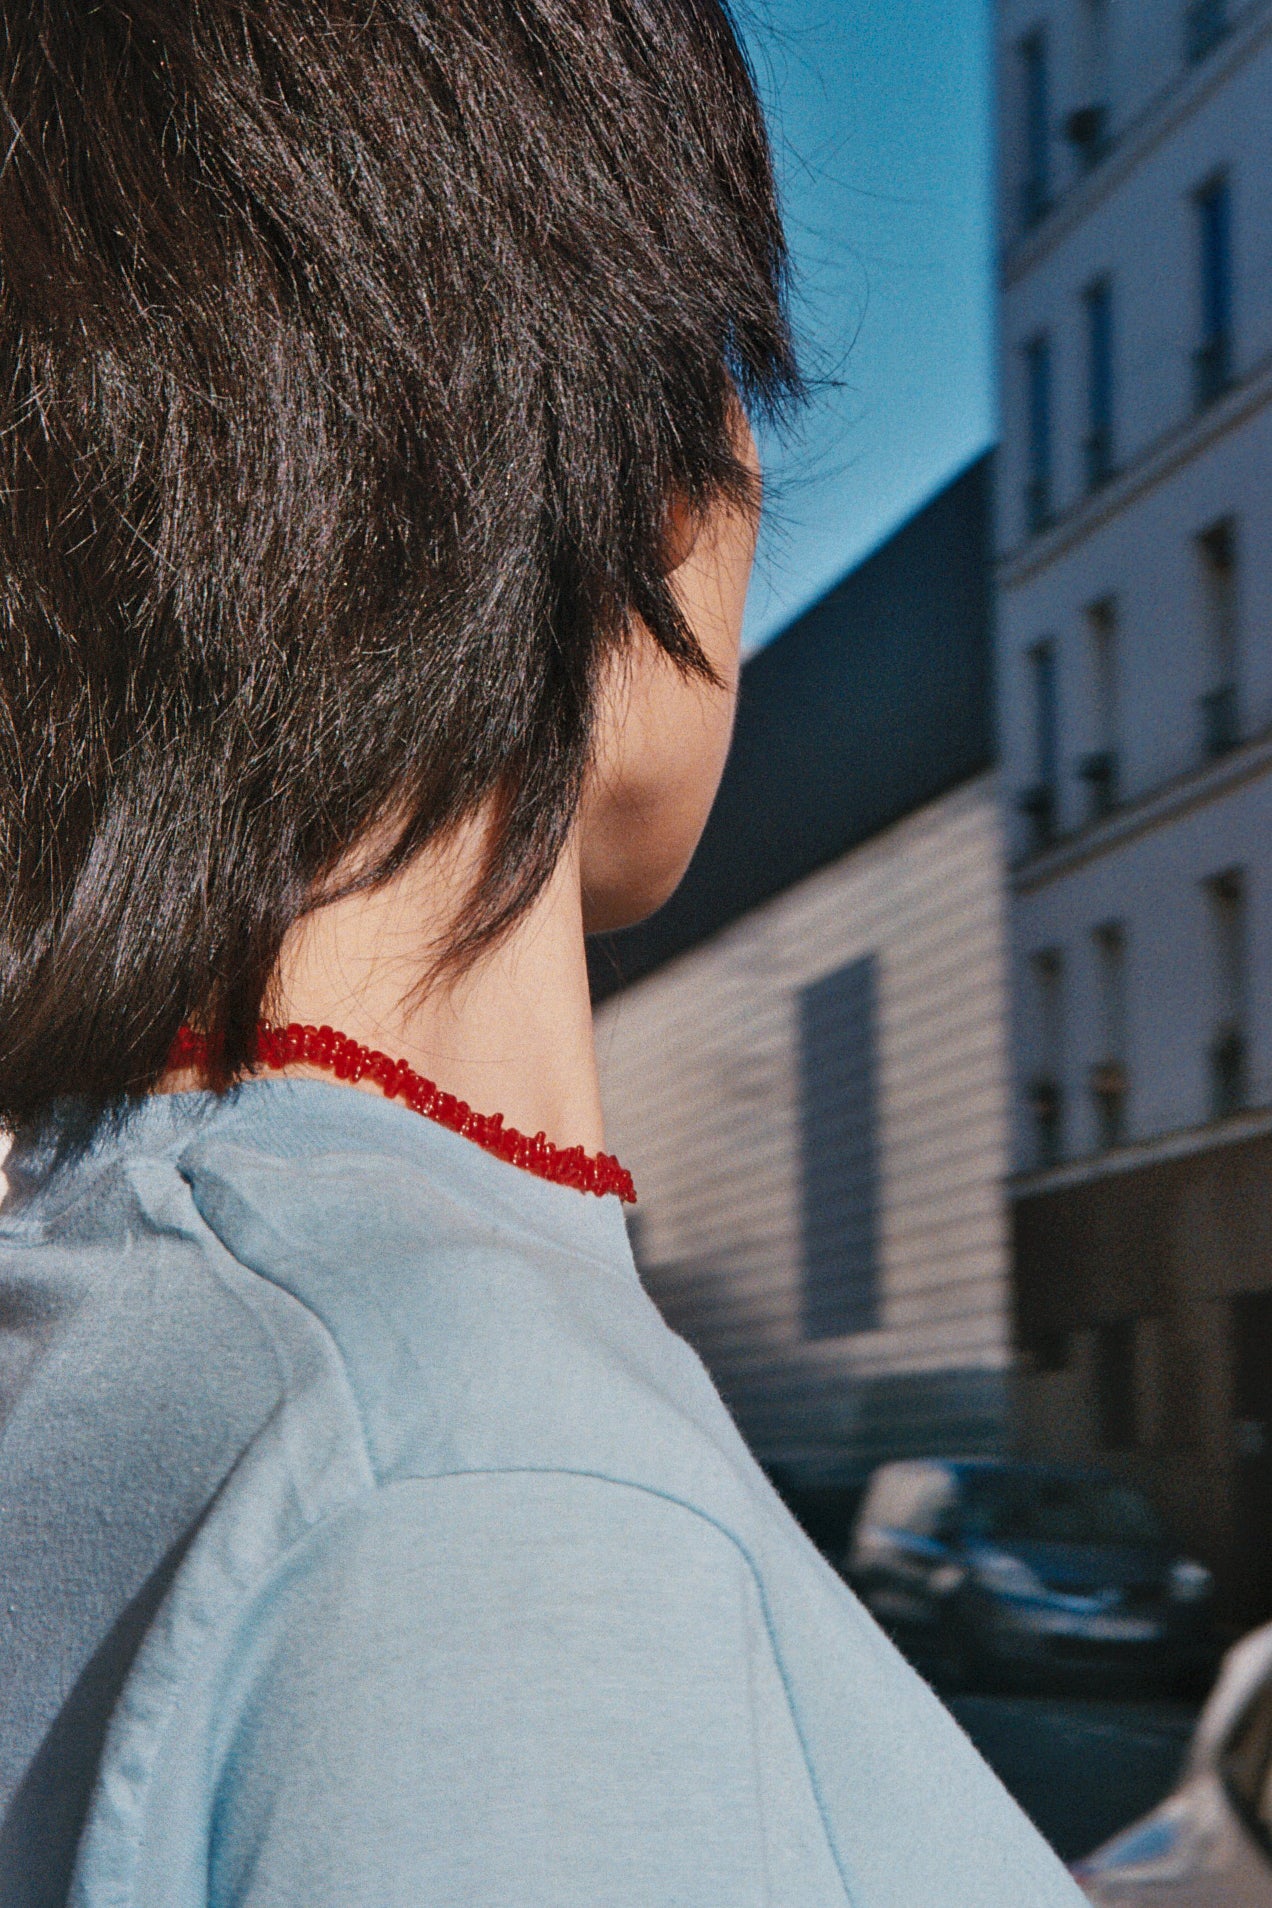 Cori necklace - Red